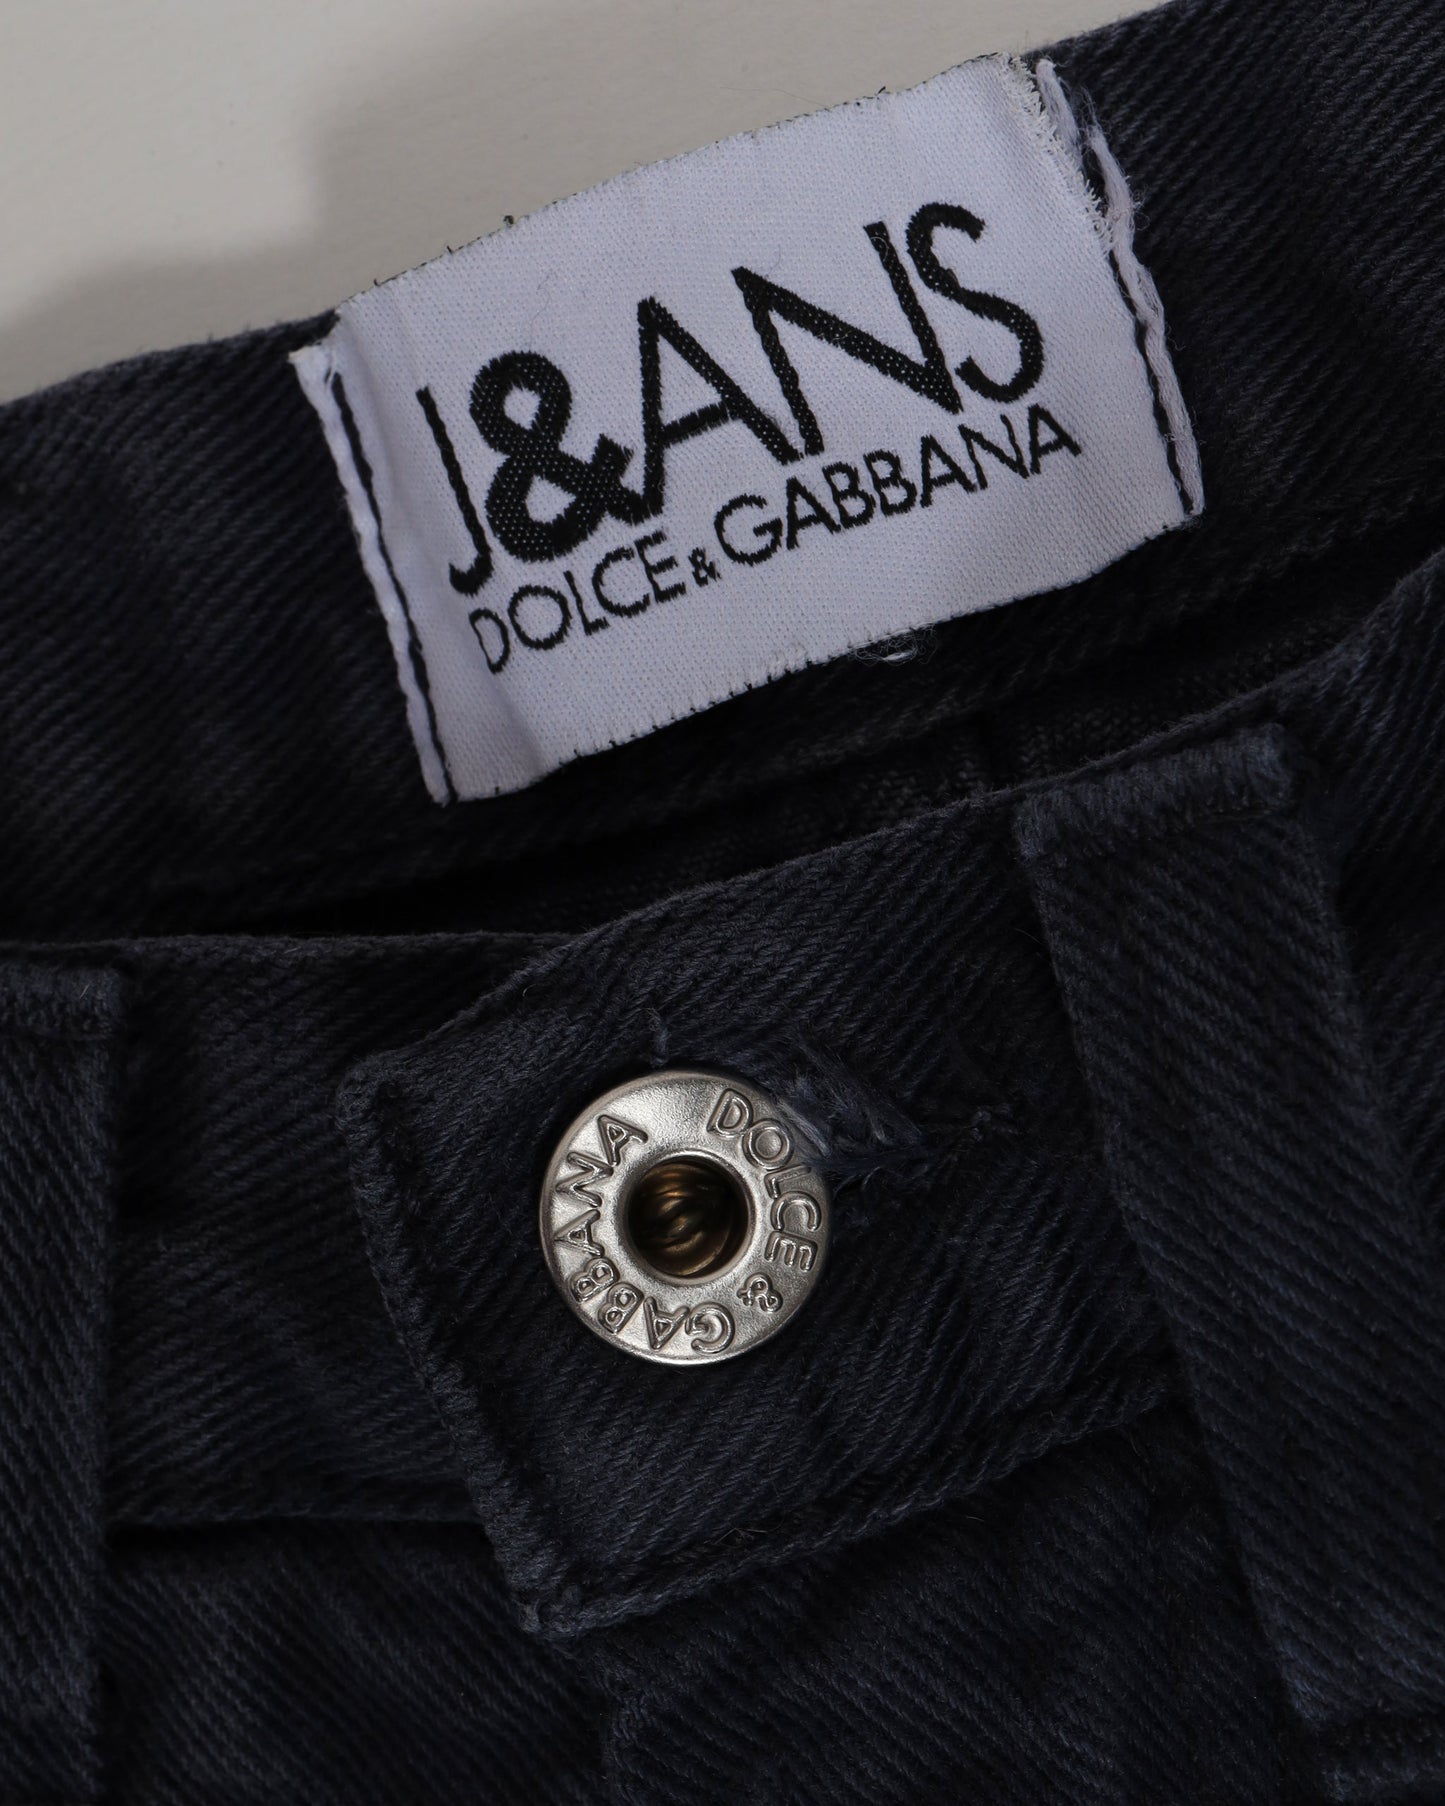 Vintage Dolce & Gabbana Straight Jeans